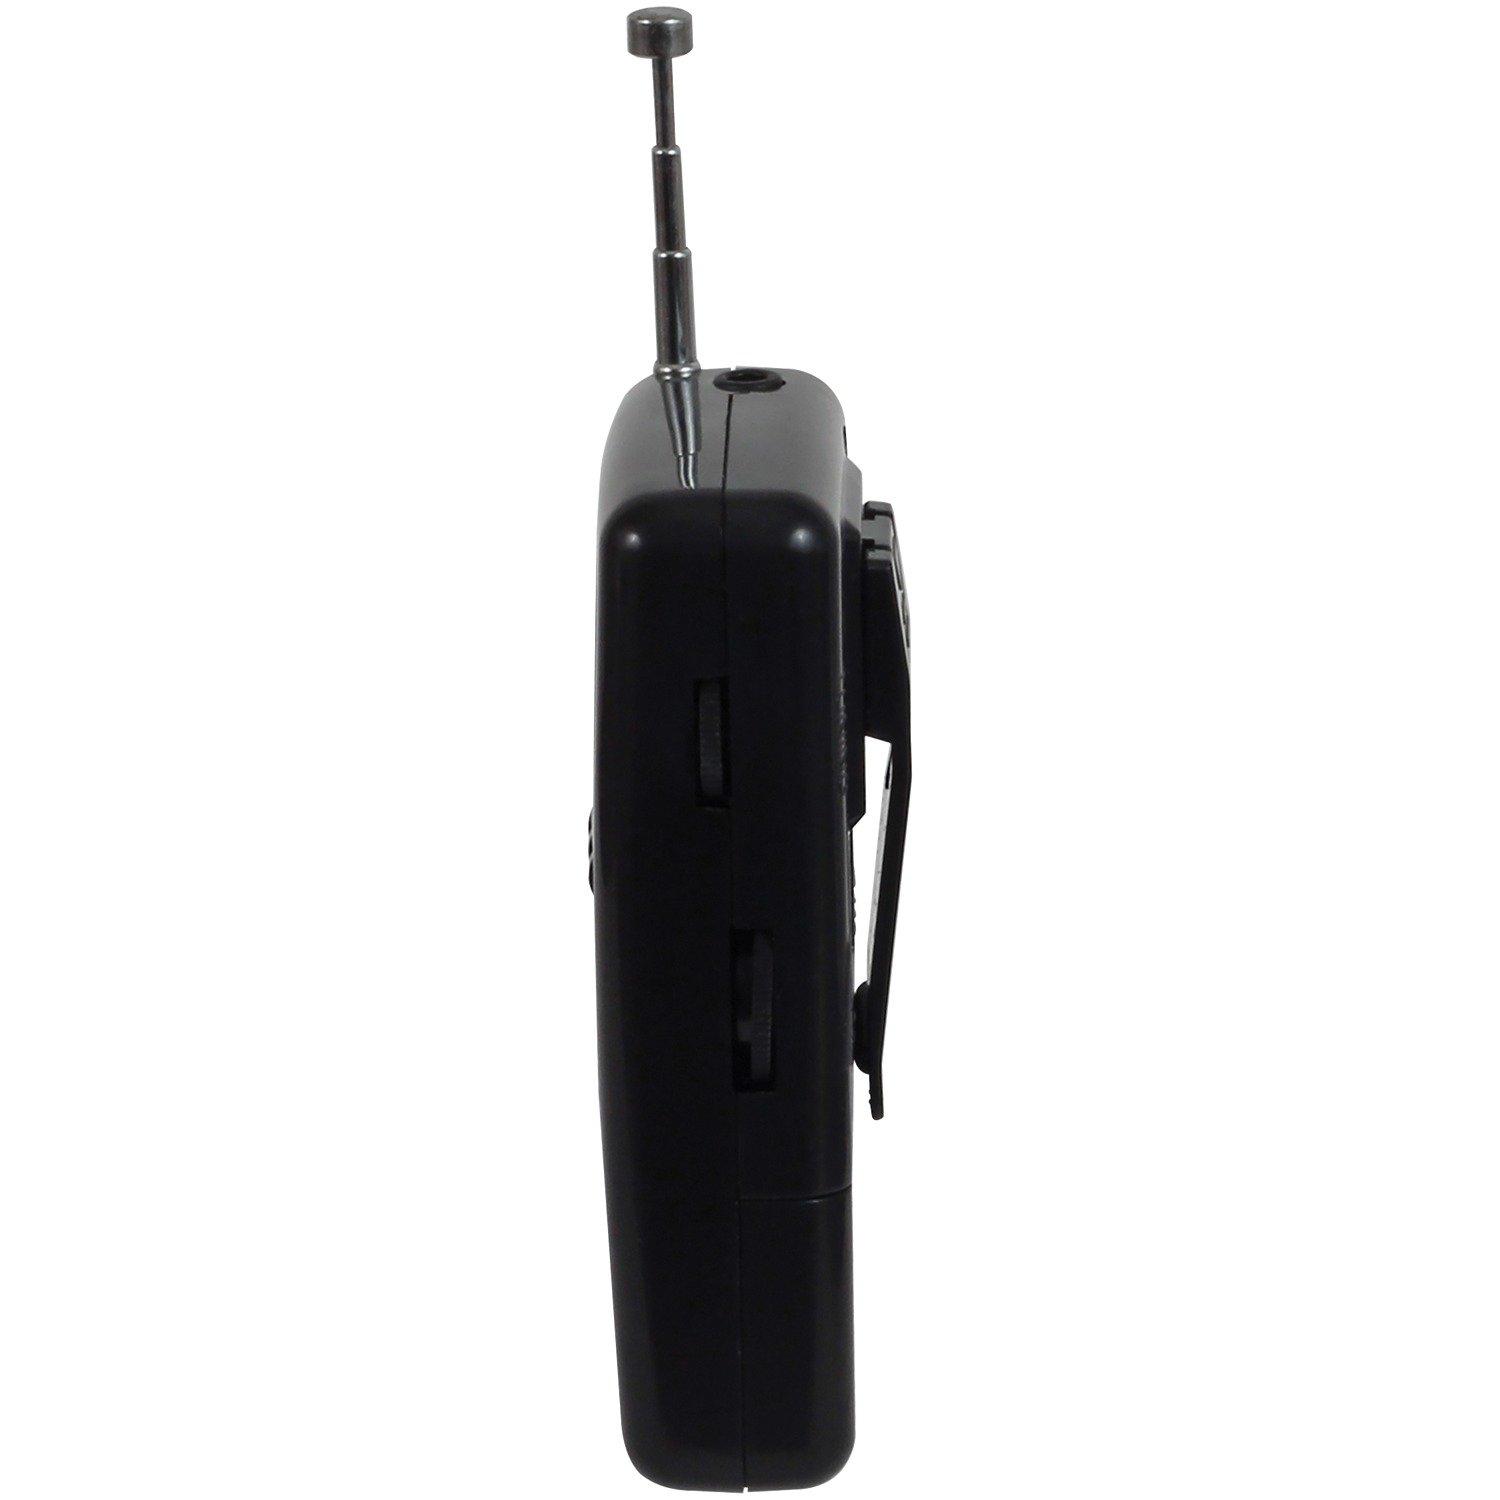 list item 3 of 5 Jensen AM/FM Portable Pocket Radio with Built-in Speaker